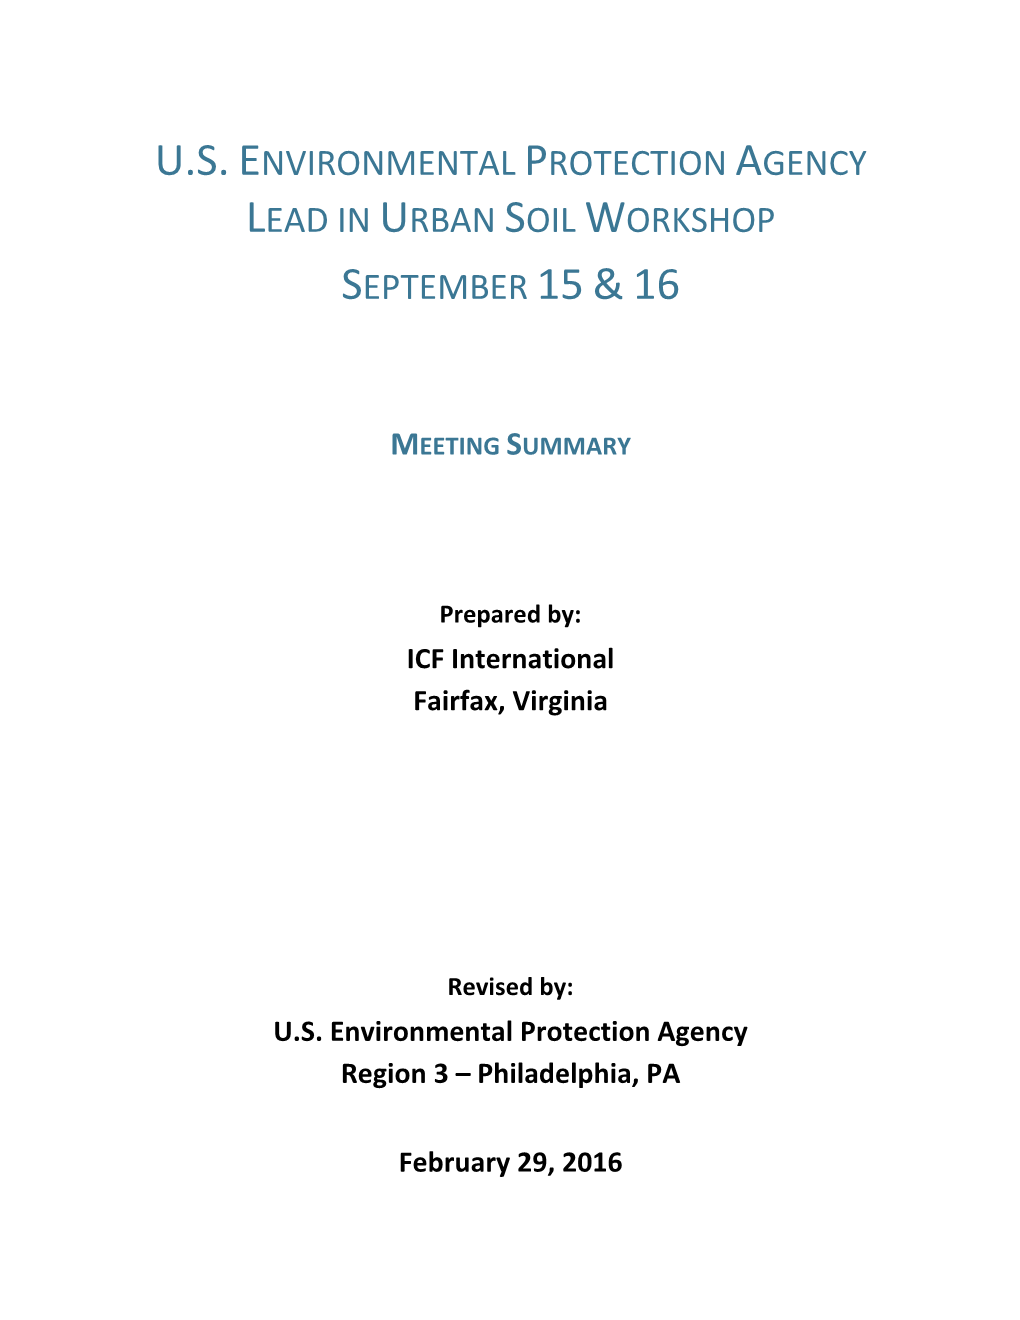 U.S. Environmental Protection Agency Lead in Urban Soil Workshop September 15 & 16